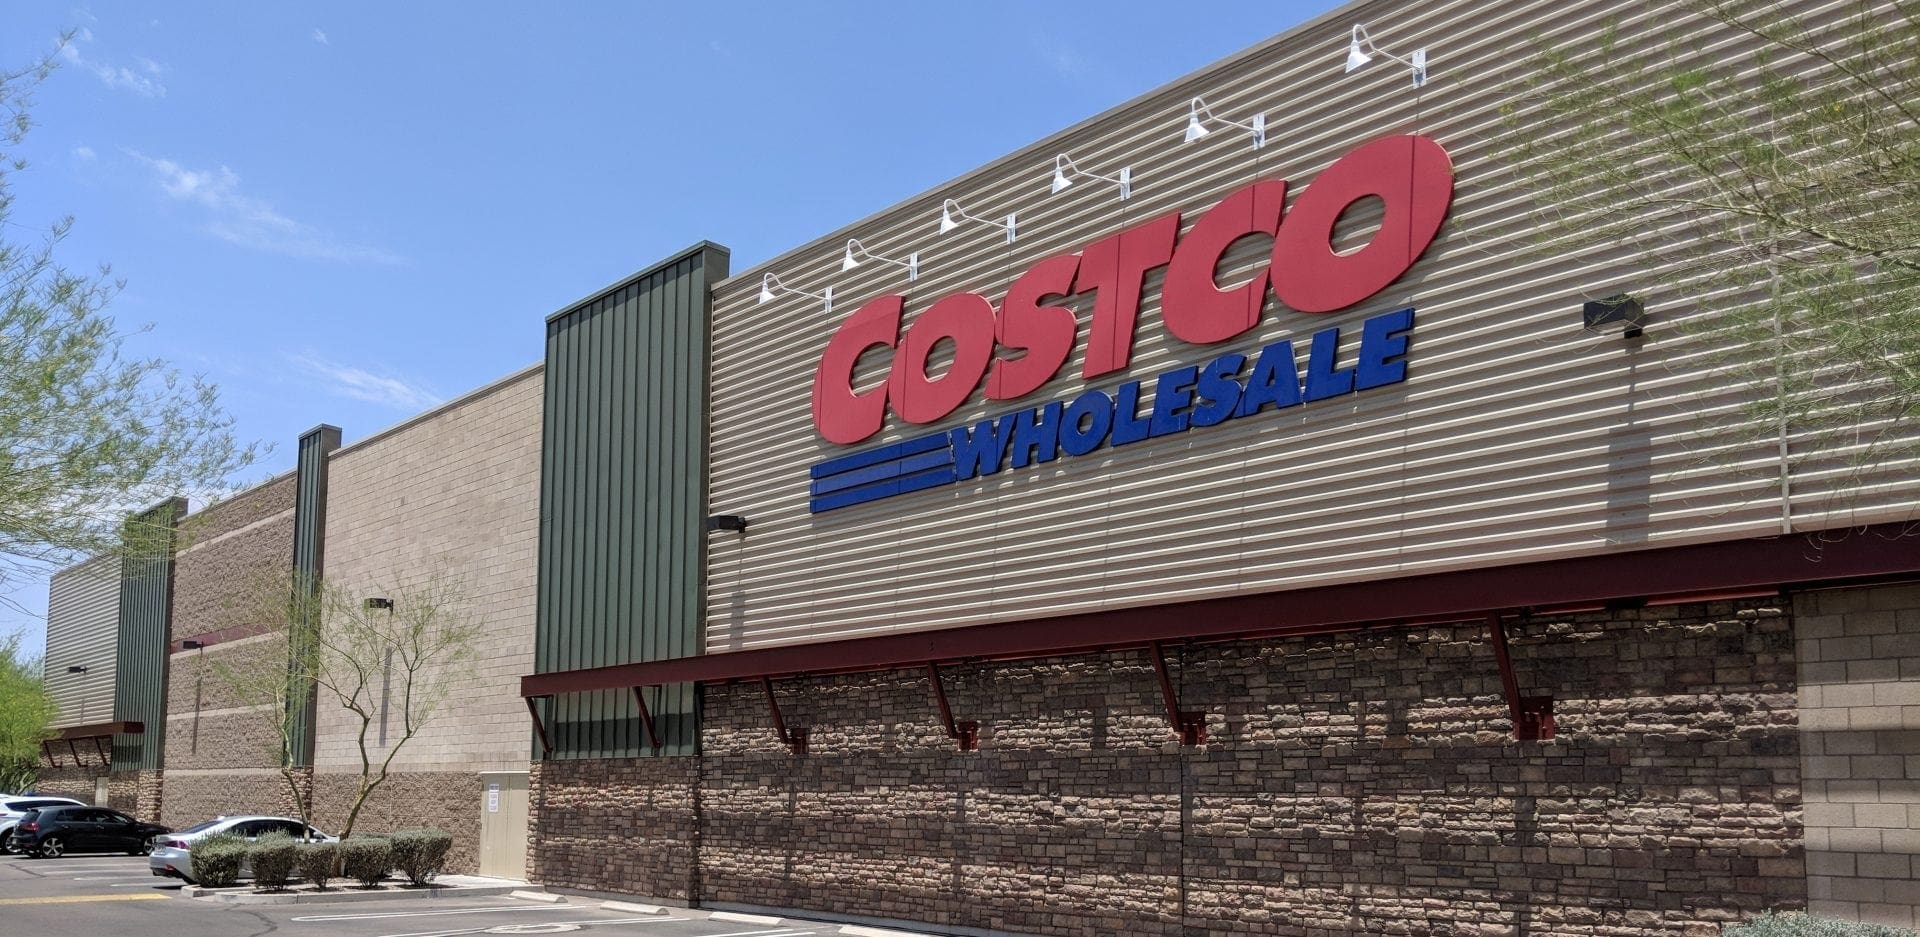 Costco | Commercial Painting Jobs | Arizona Painting Company